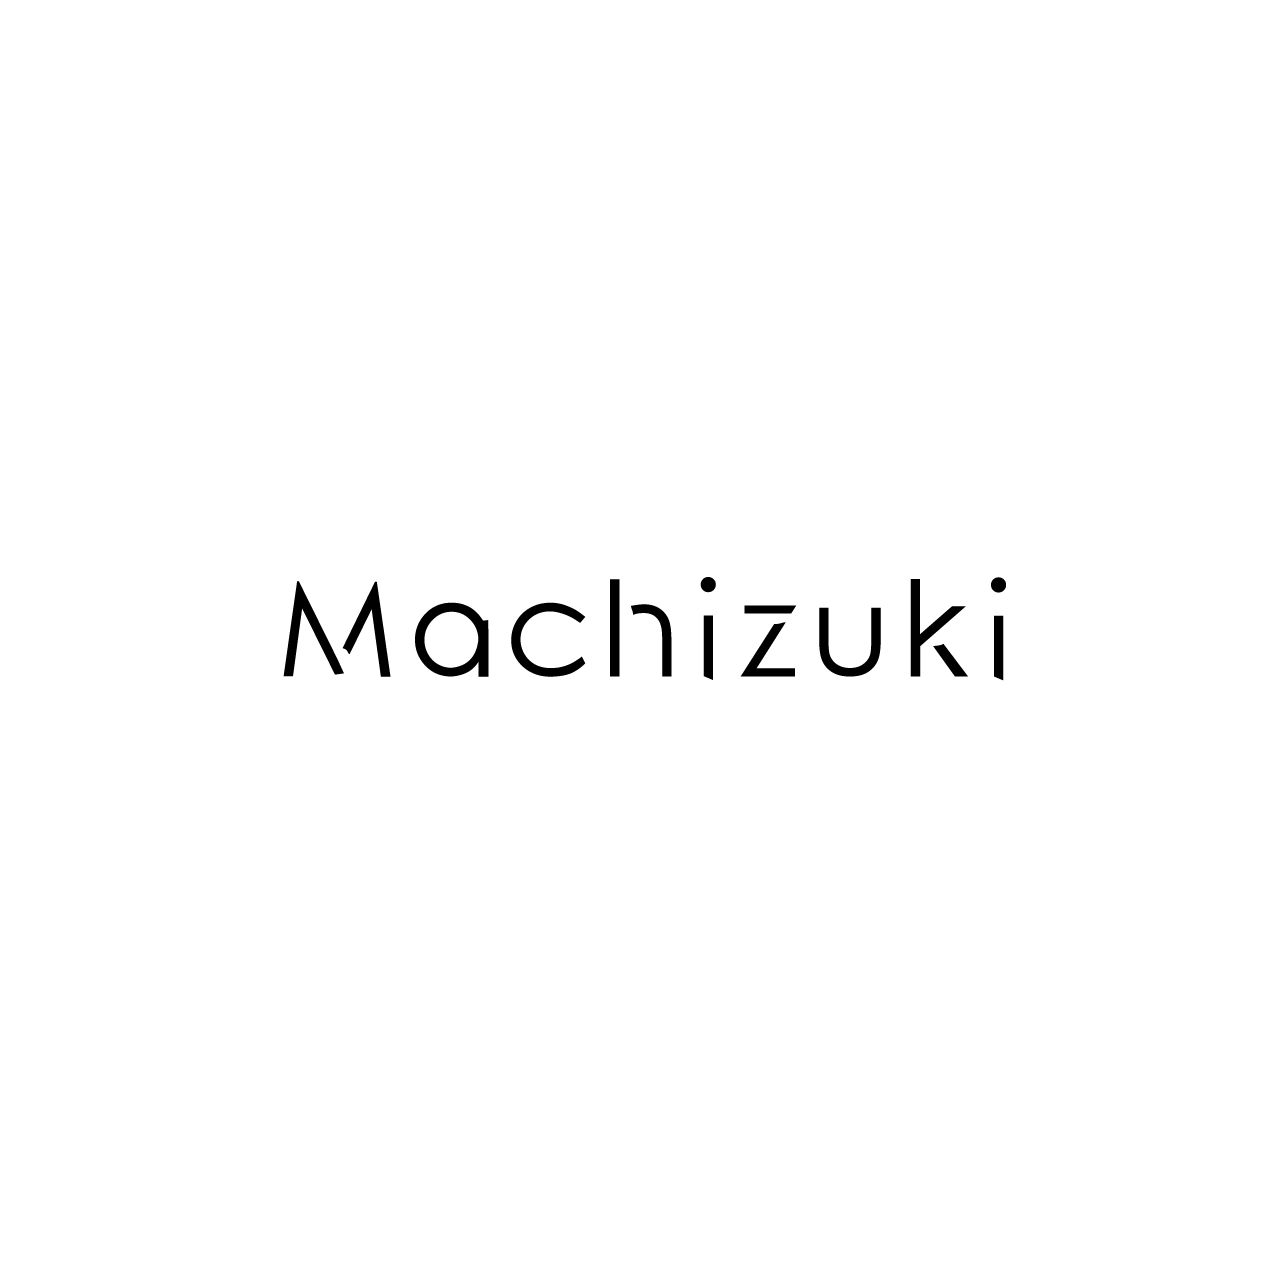 Machizuki